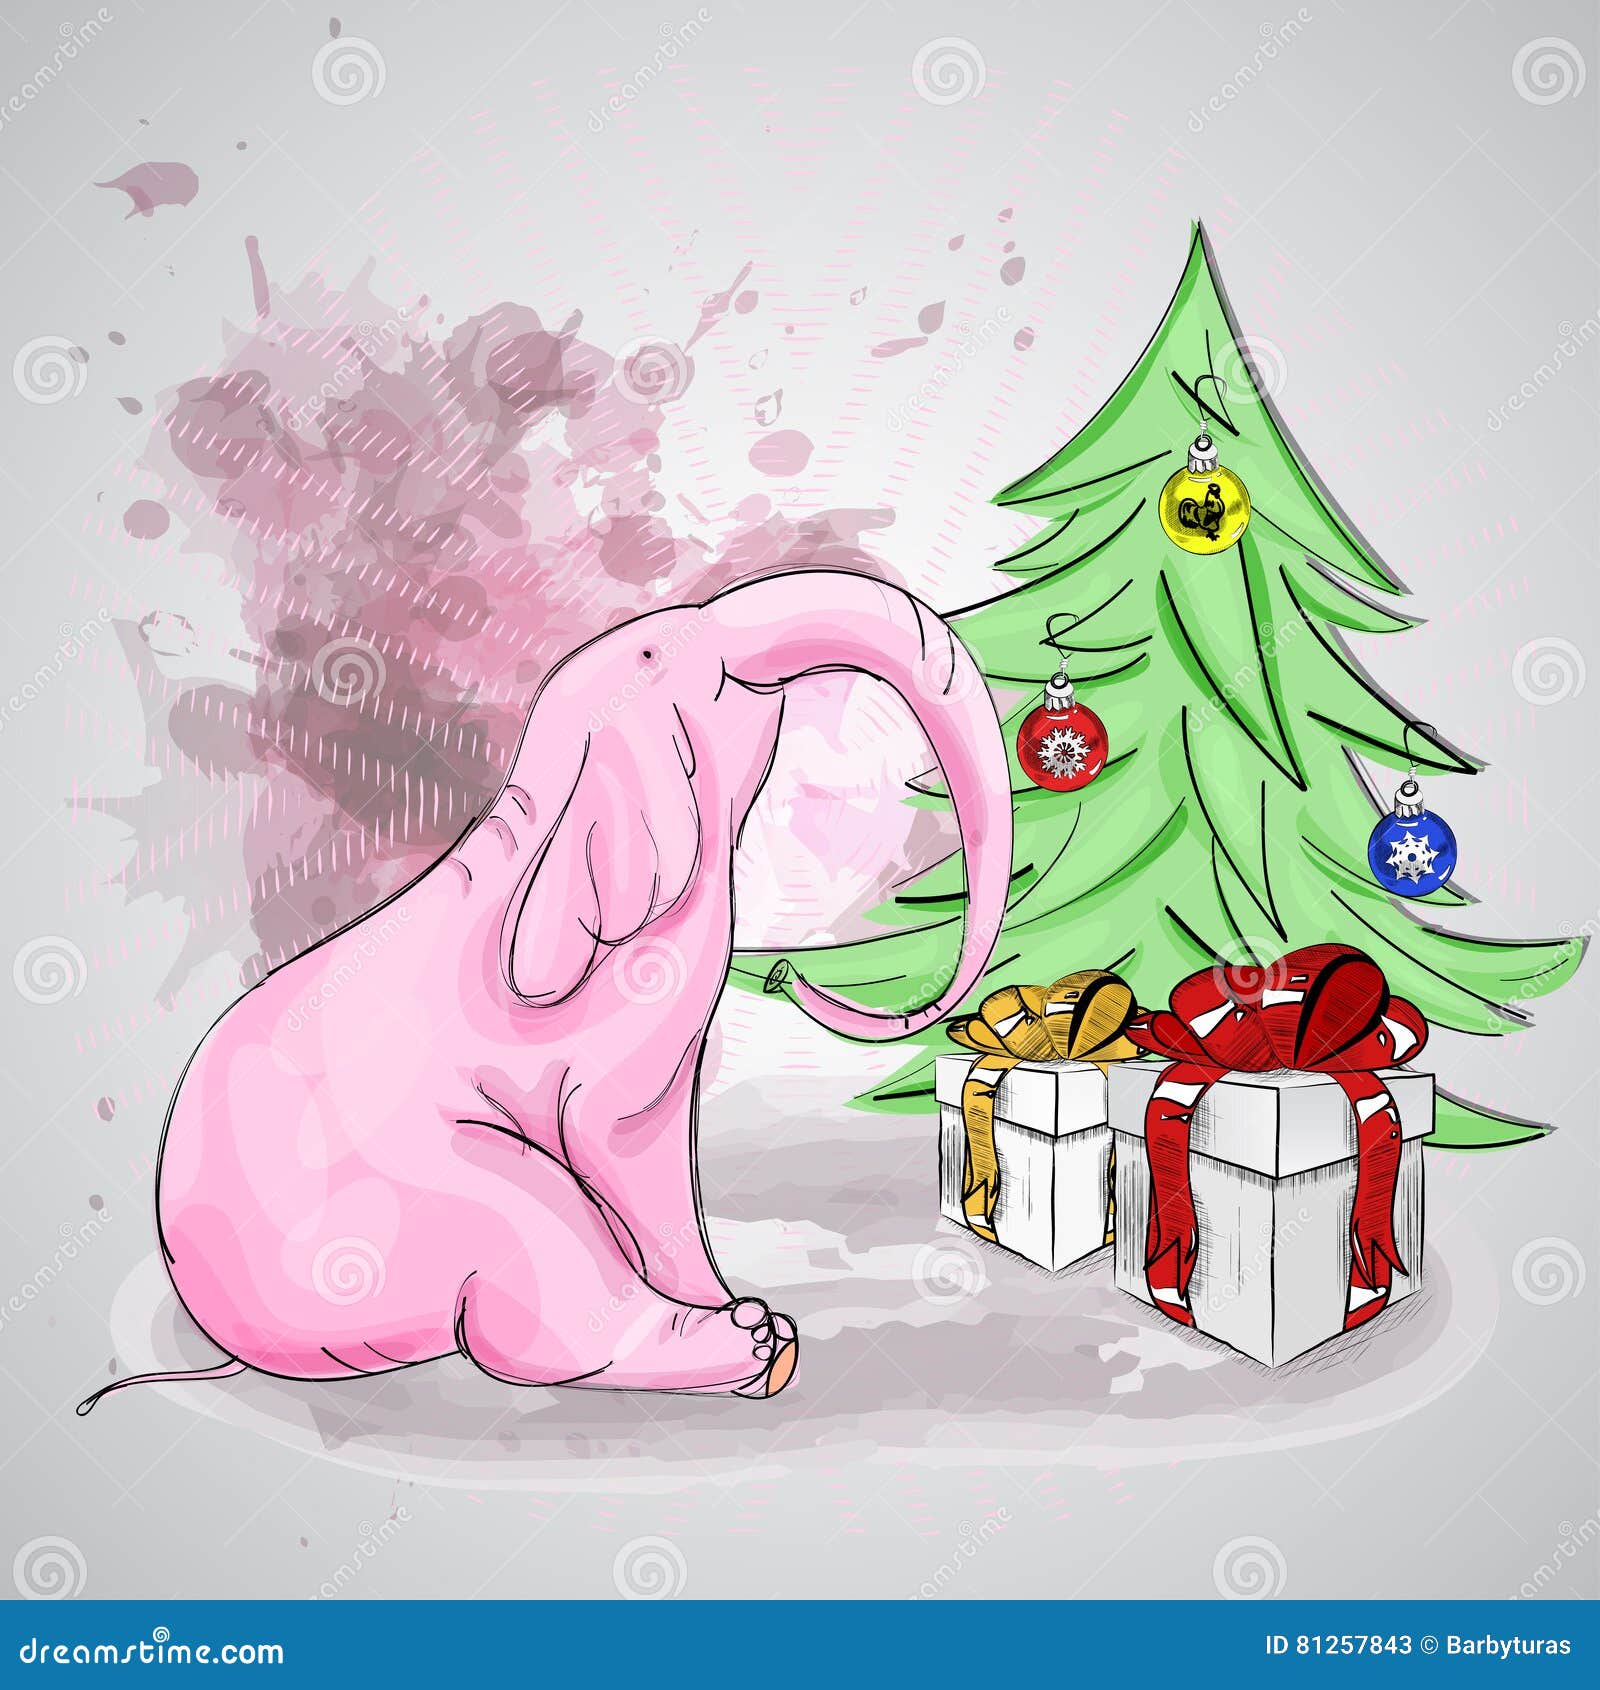 705+ Christmas Elephant Svg - SVG Bundles